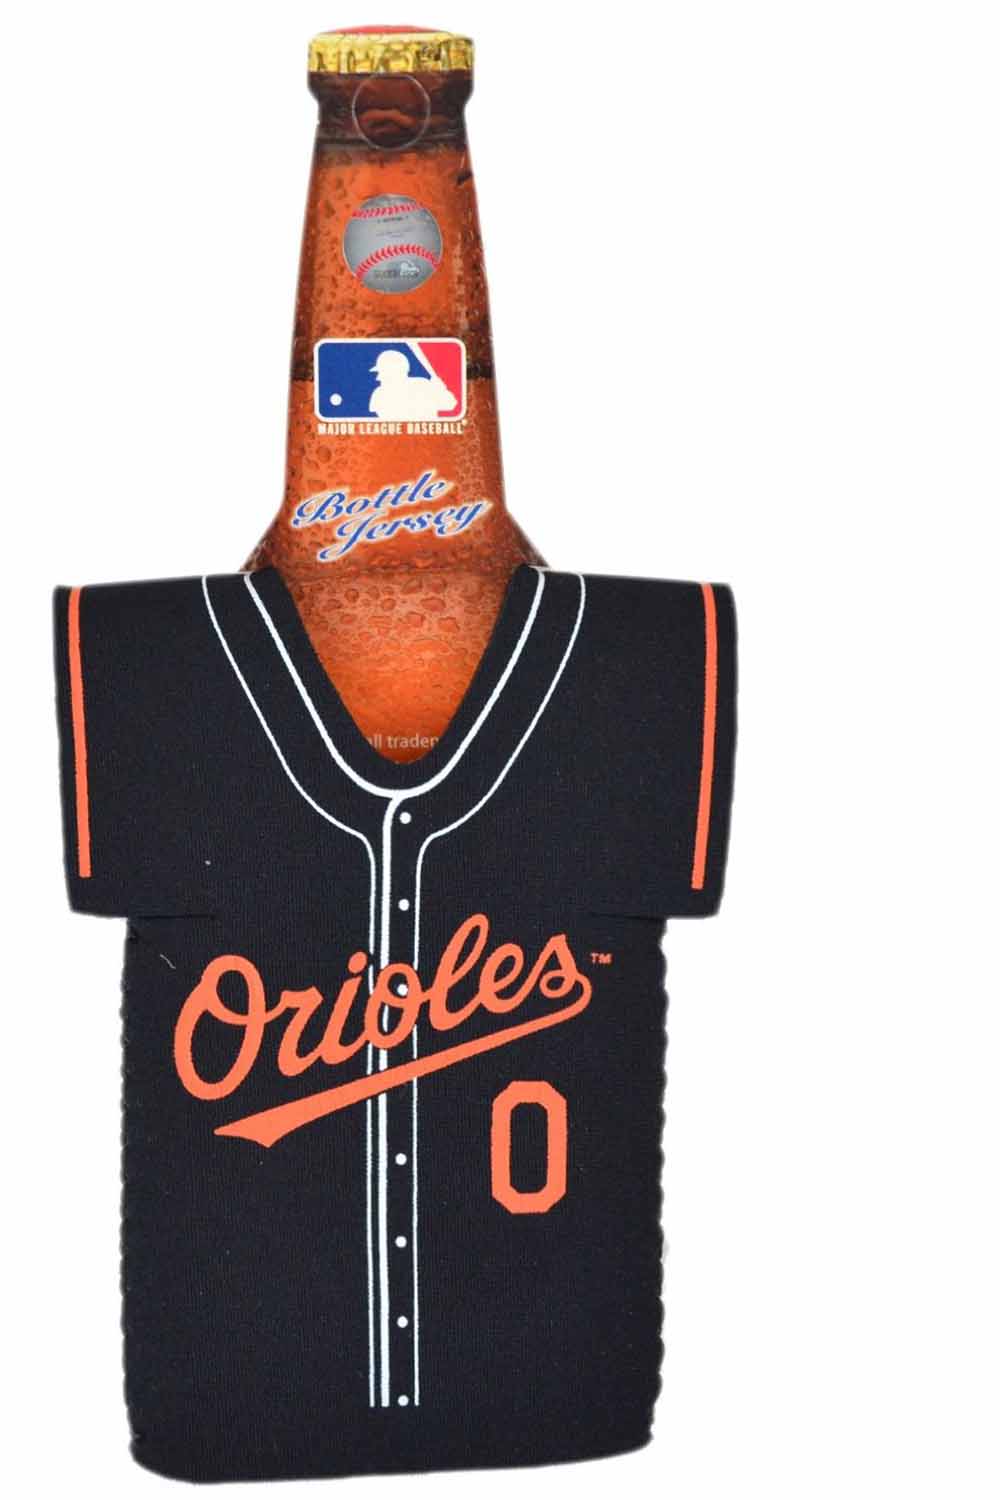 baseball jersey bottle coolers